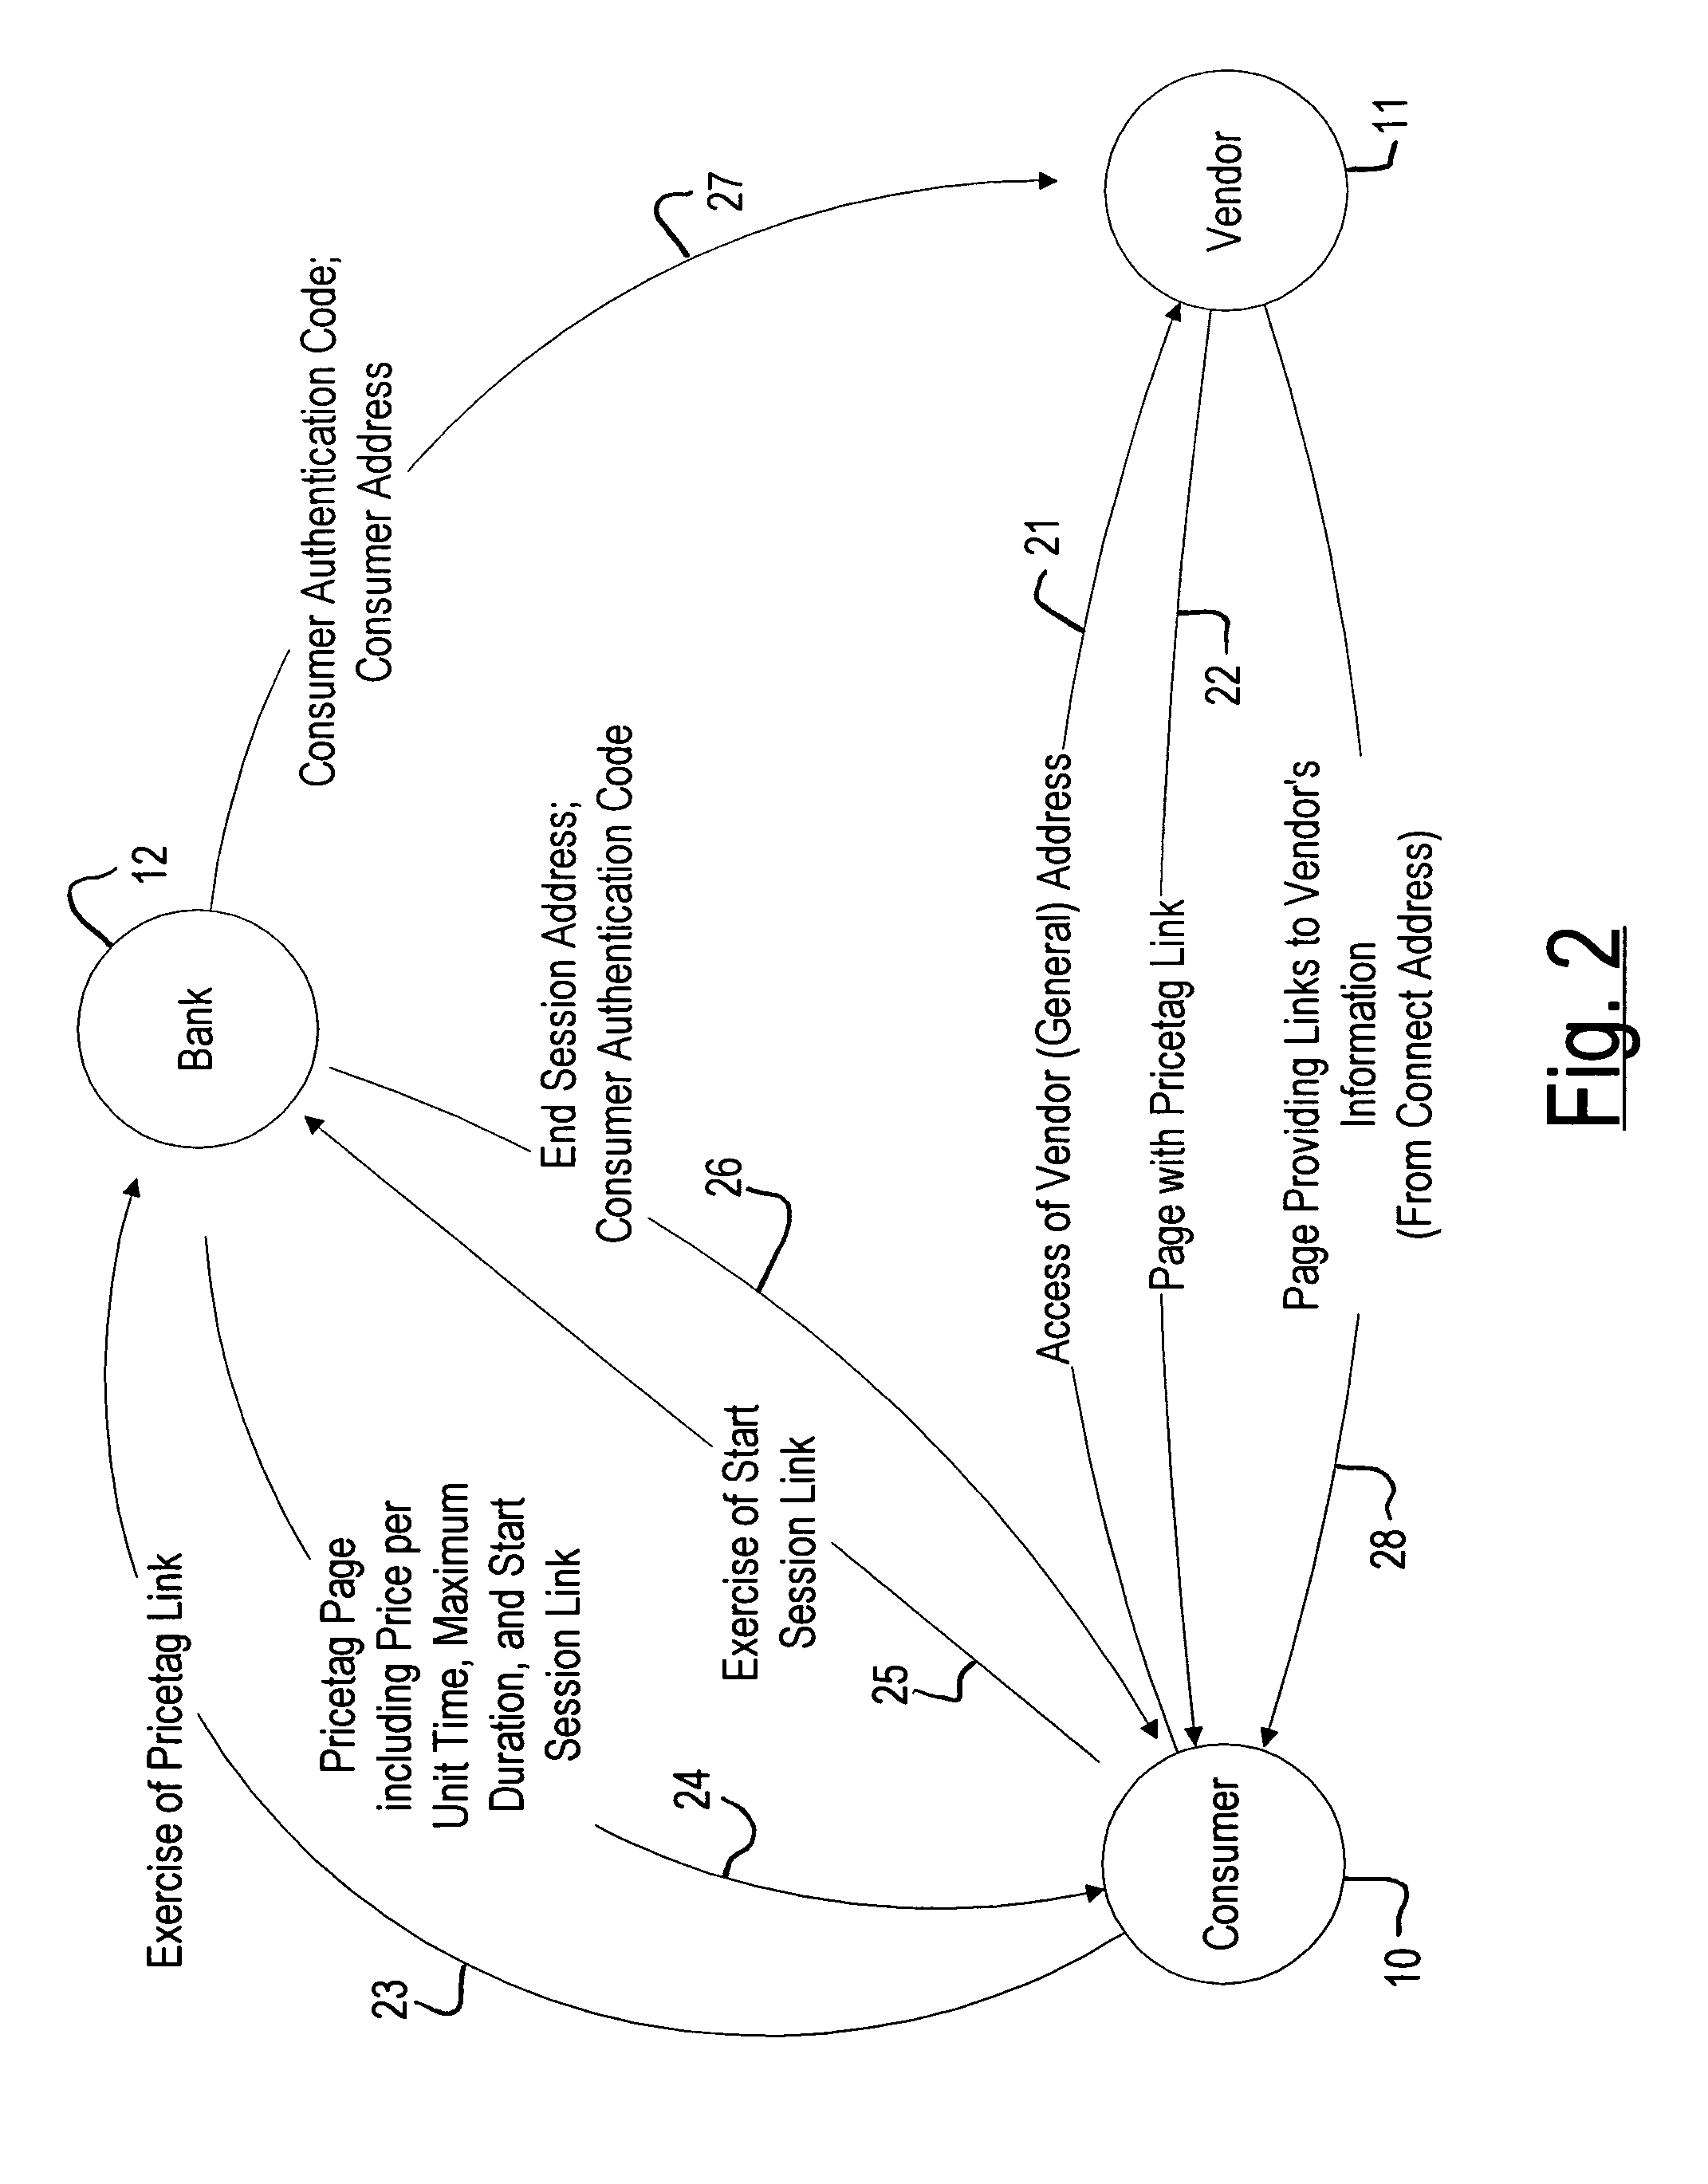 Method for billing for services delivered over a computer network